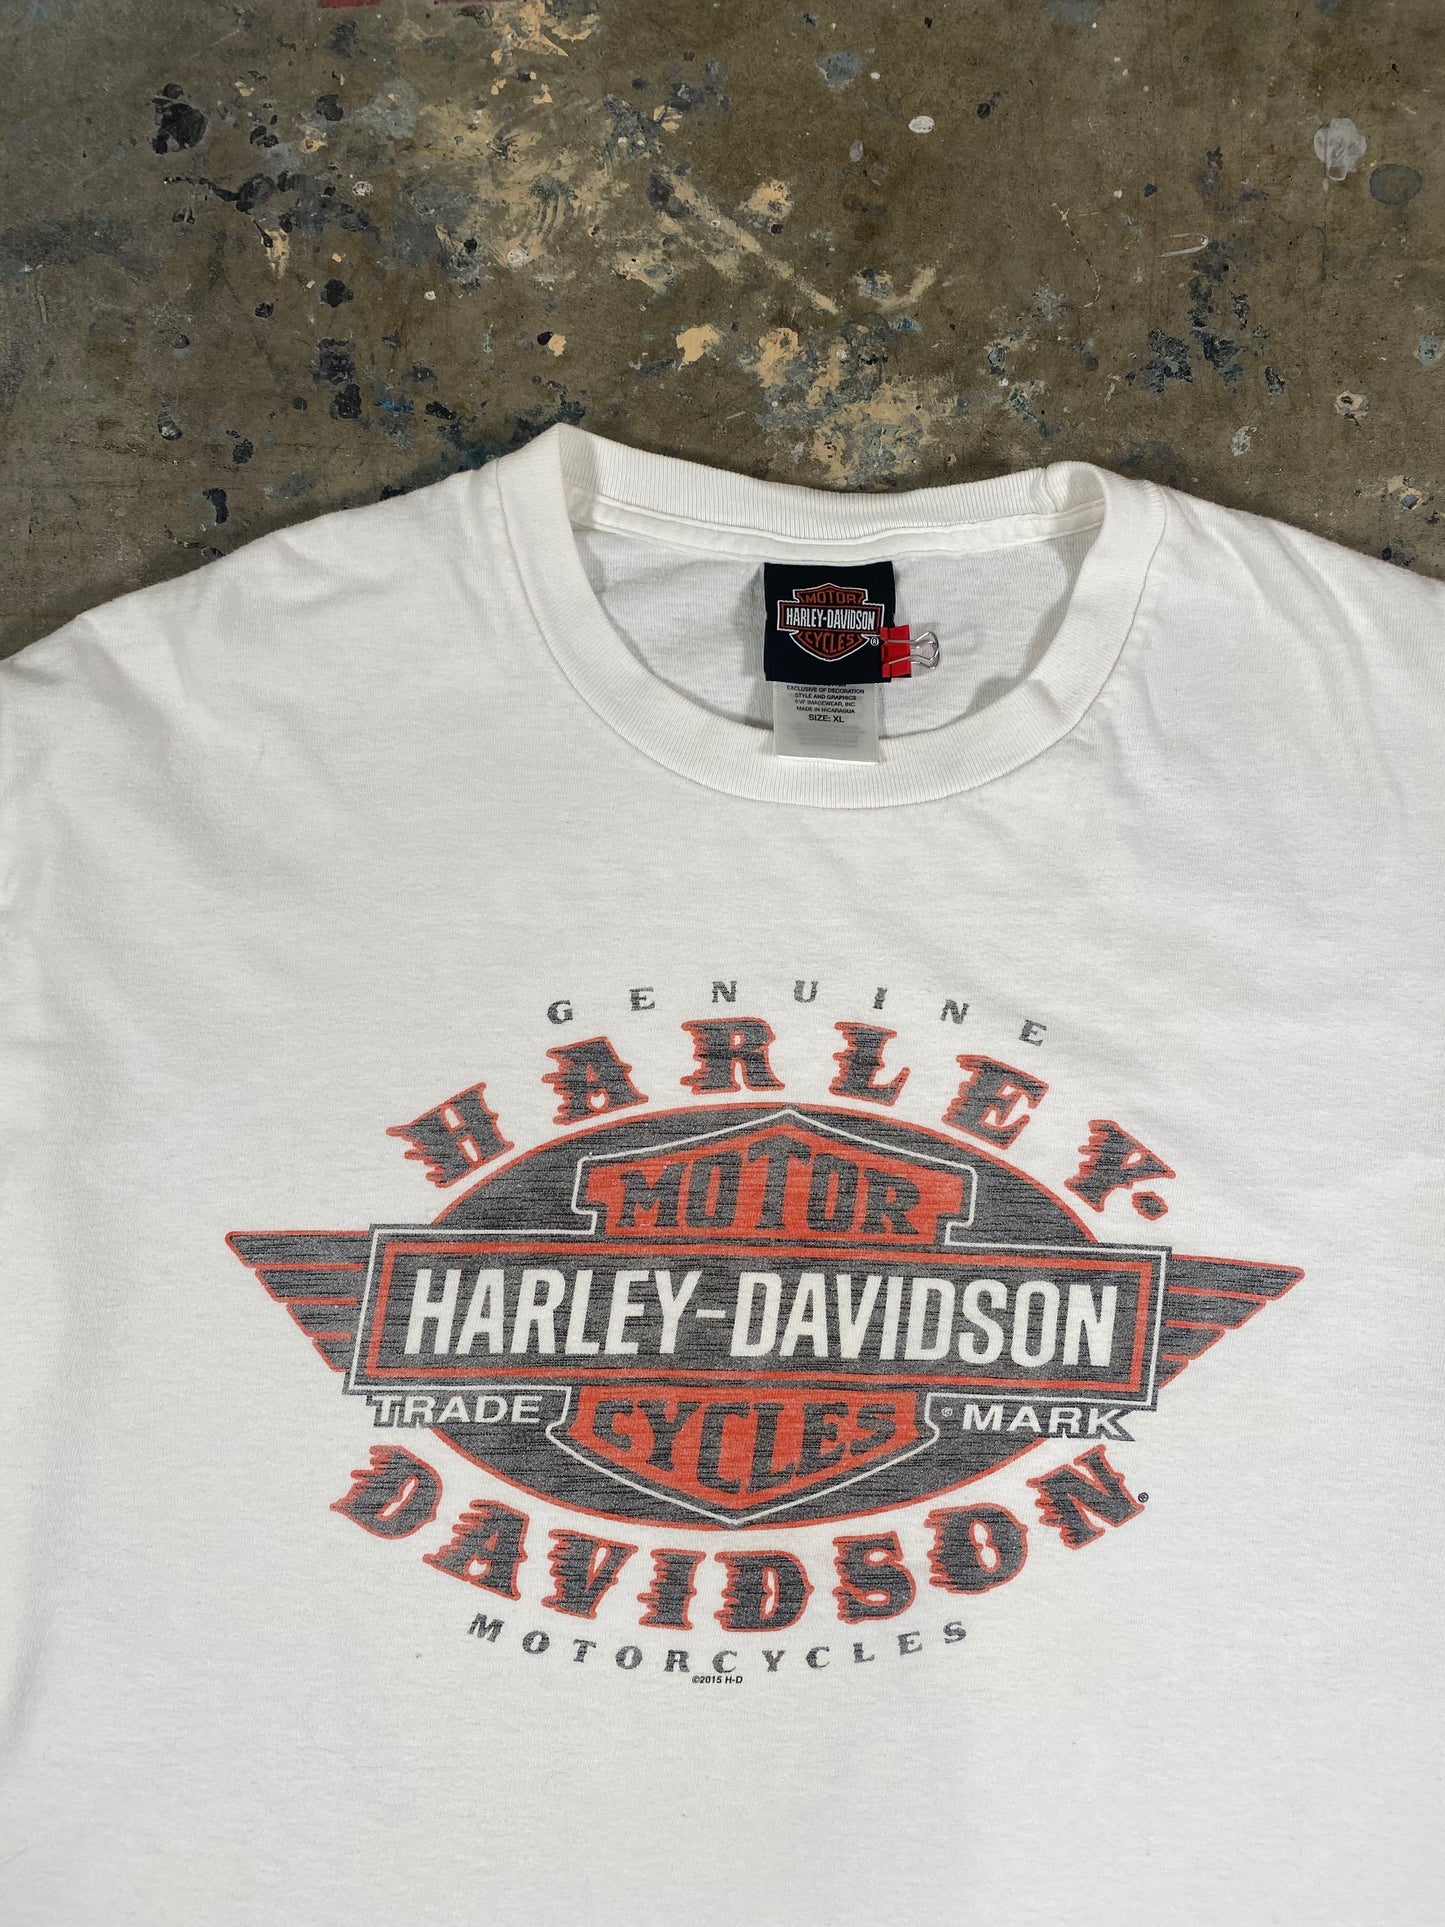 Harley Davidson Choppers LS (XL)